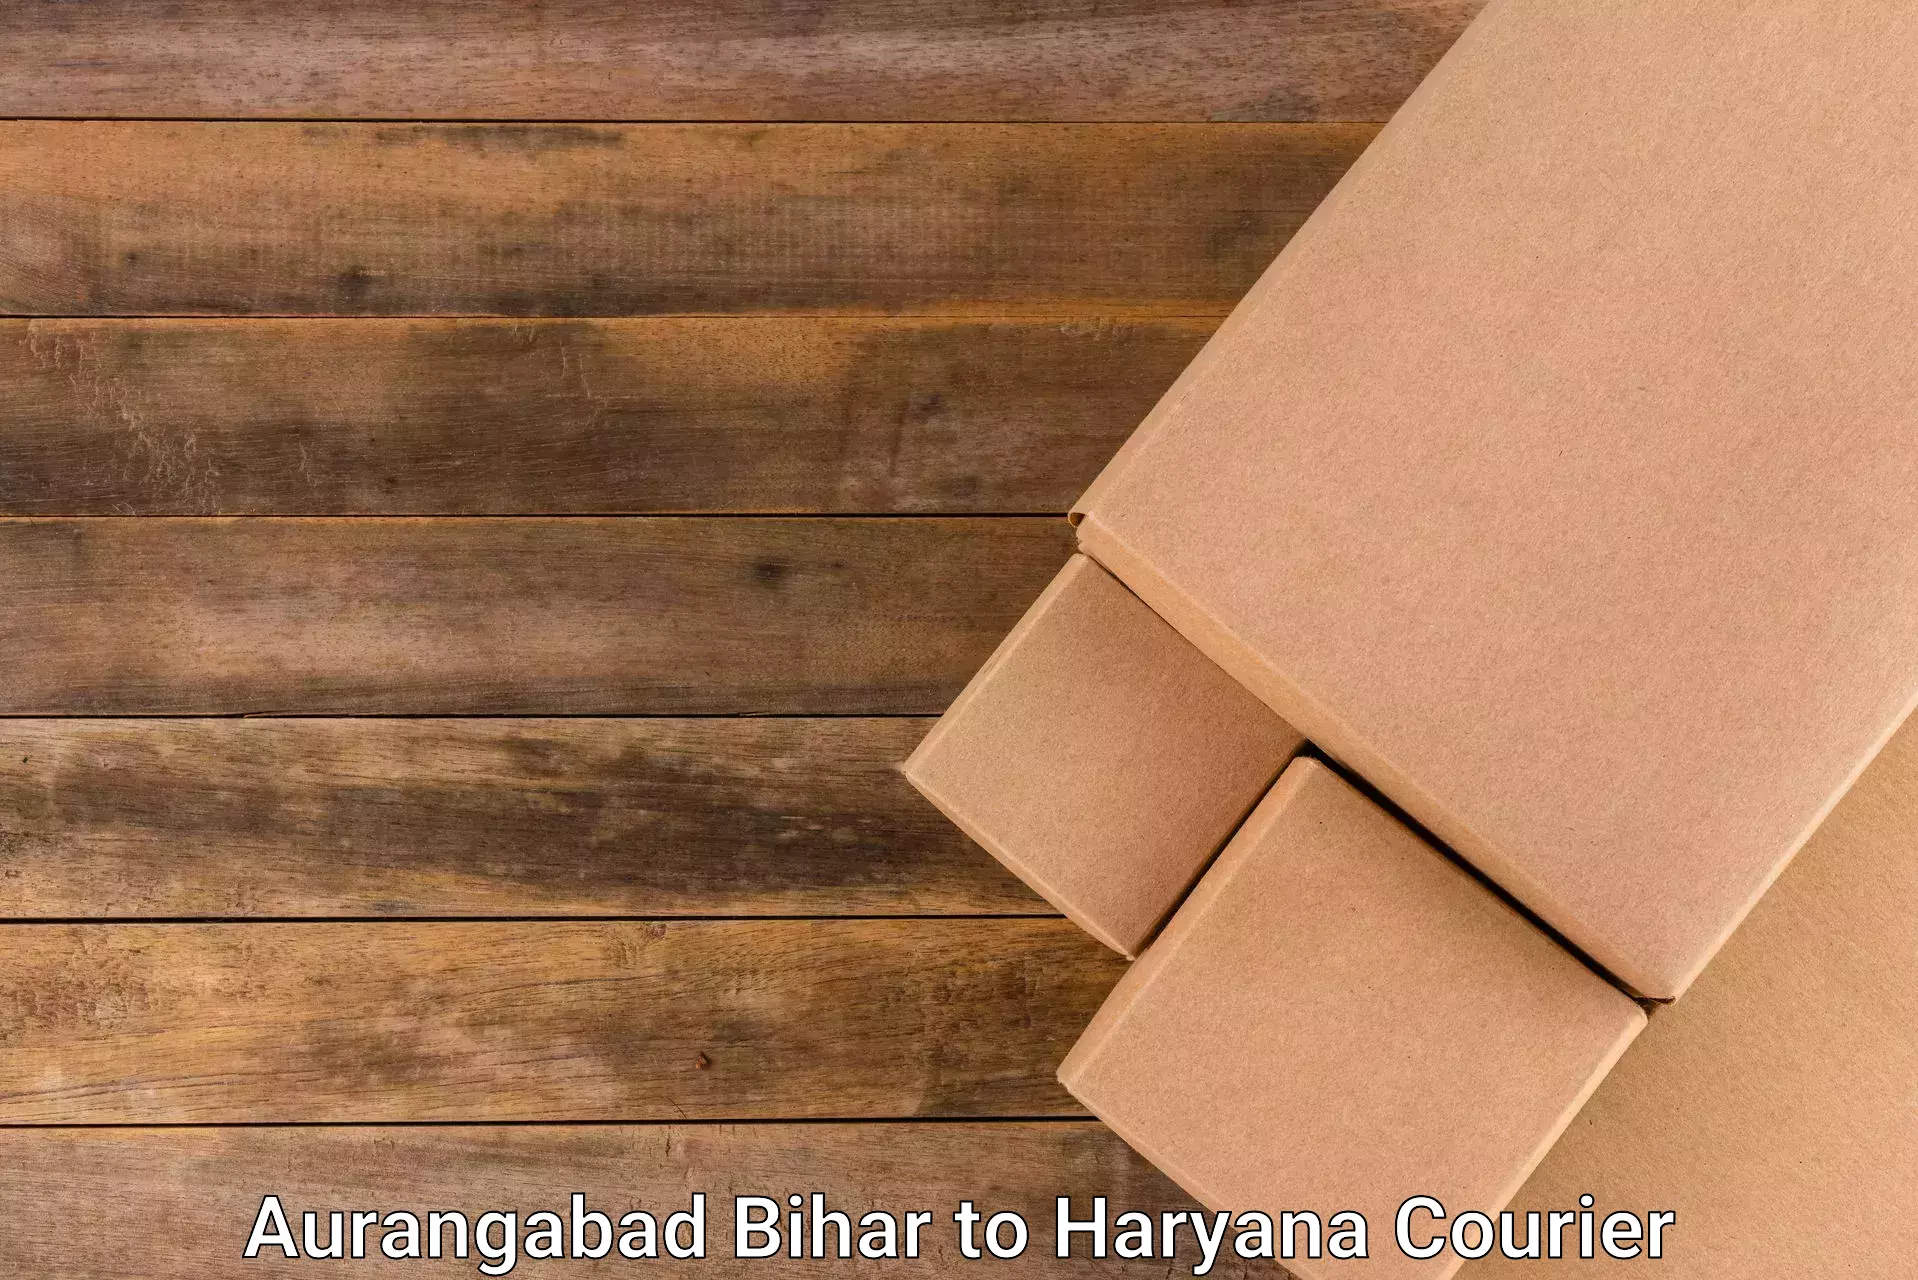 Fragile item shipping Aurangabad Bihar to Dharuhera